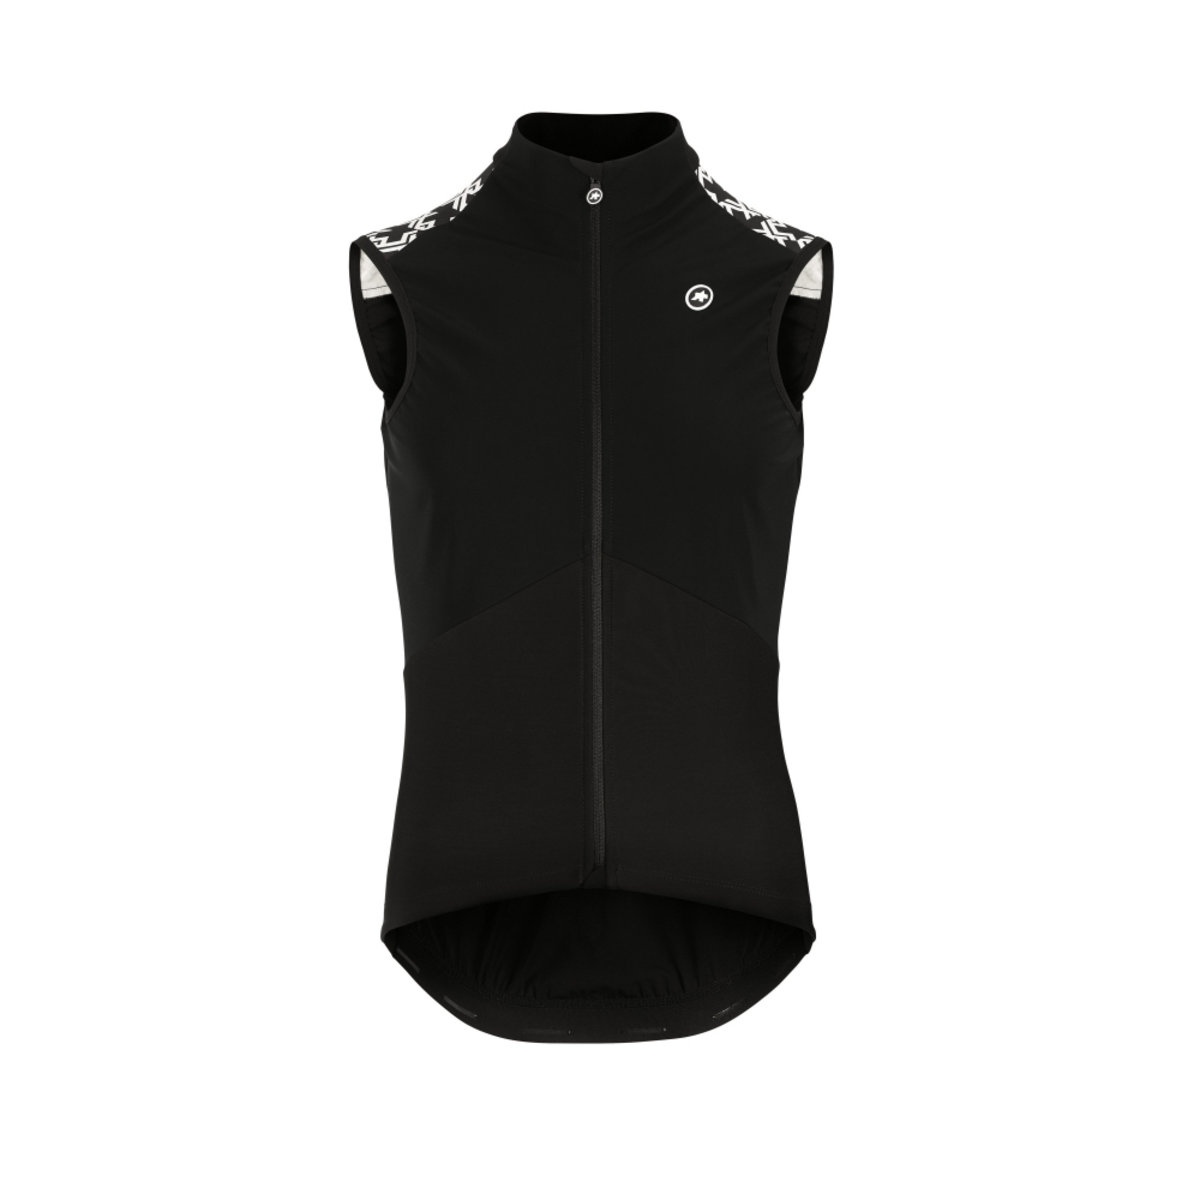 Жилетка ASSOS Mille GT Spring Fall Airblock Vest Black Series, мужская, черная с белым, XLG фото 